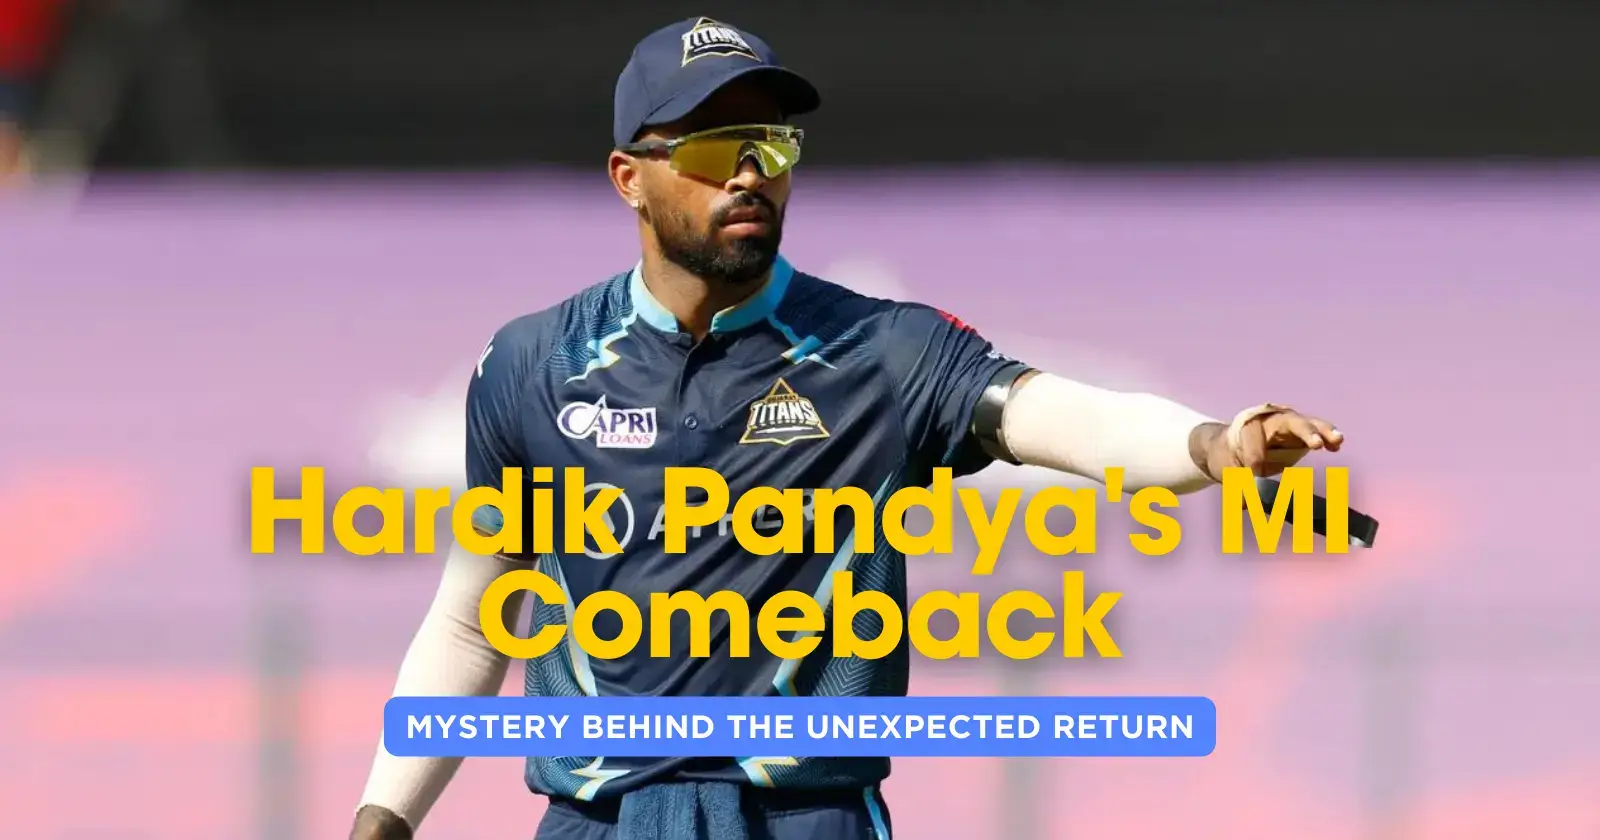 hardik-pandya-mi-comeback-unraveling-mystery-behind-unexpected-return